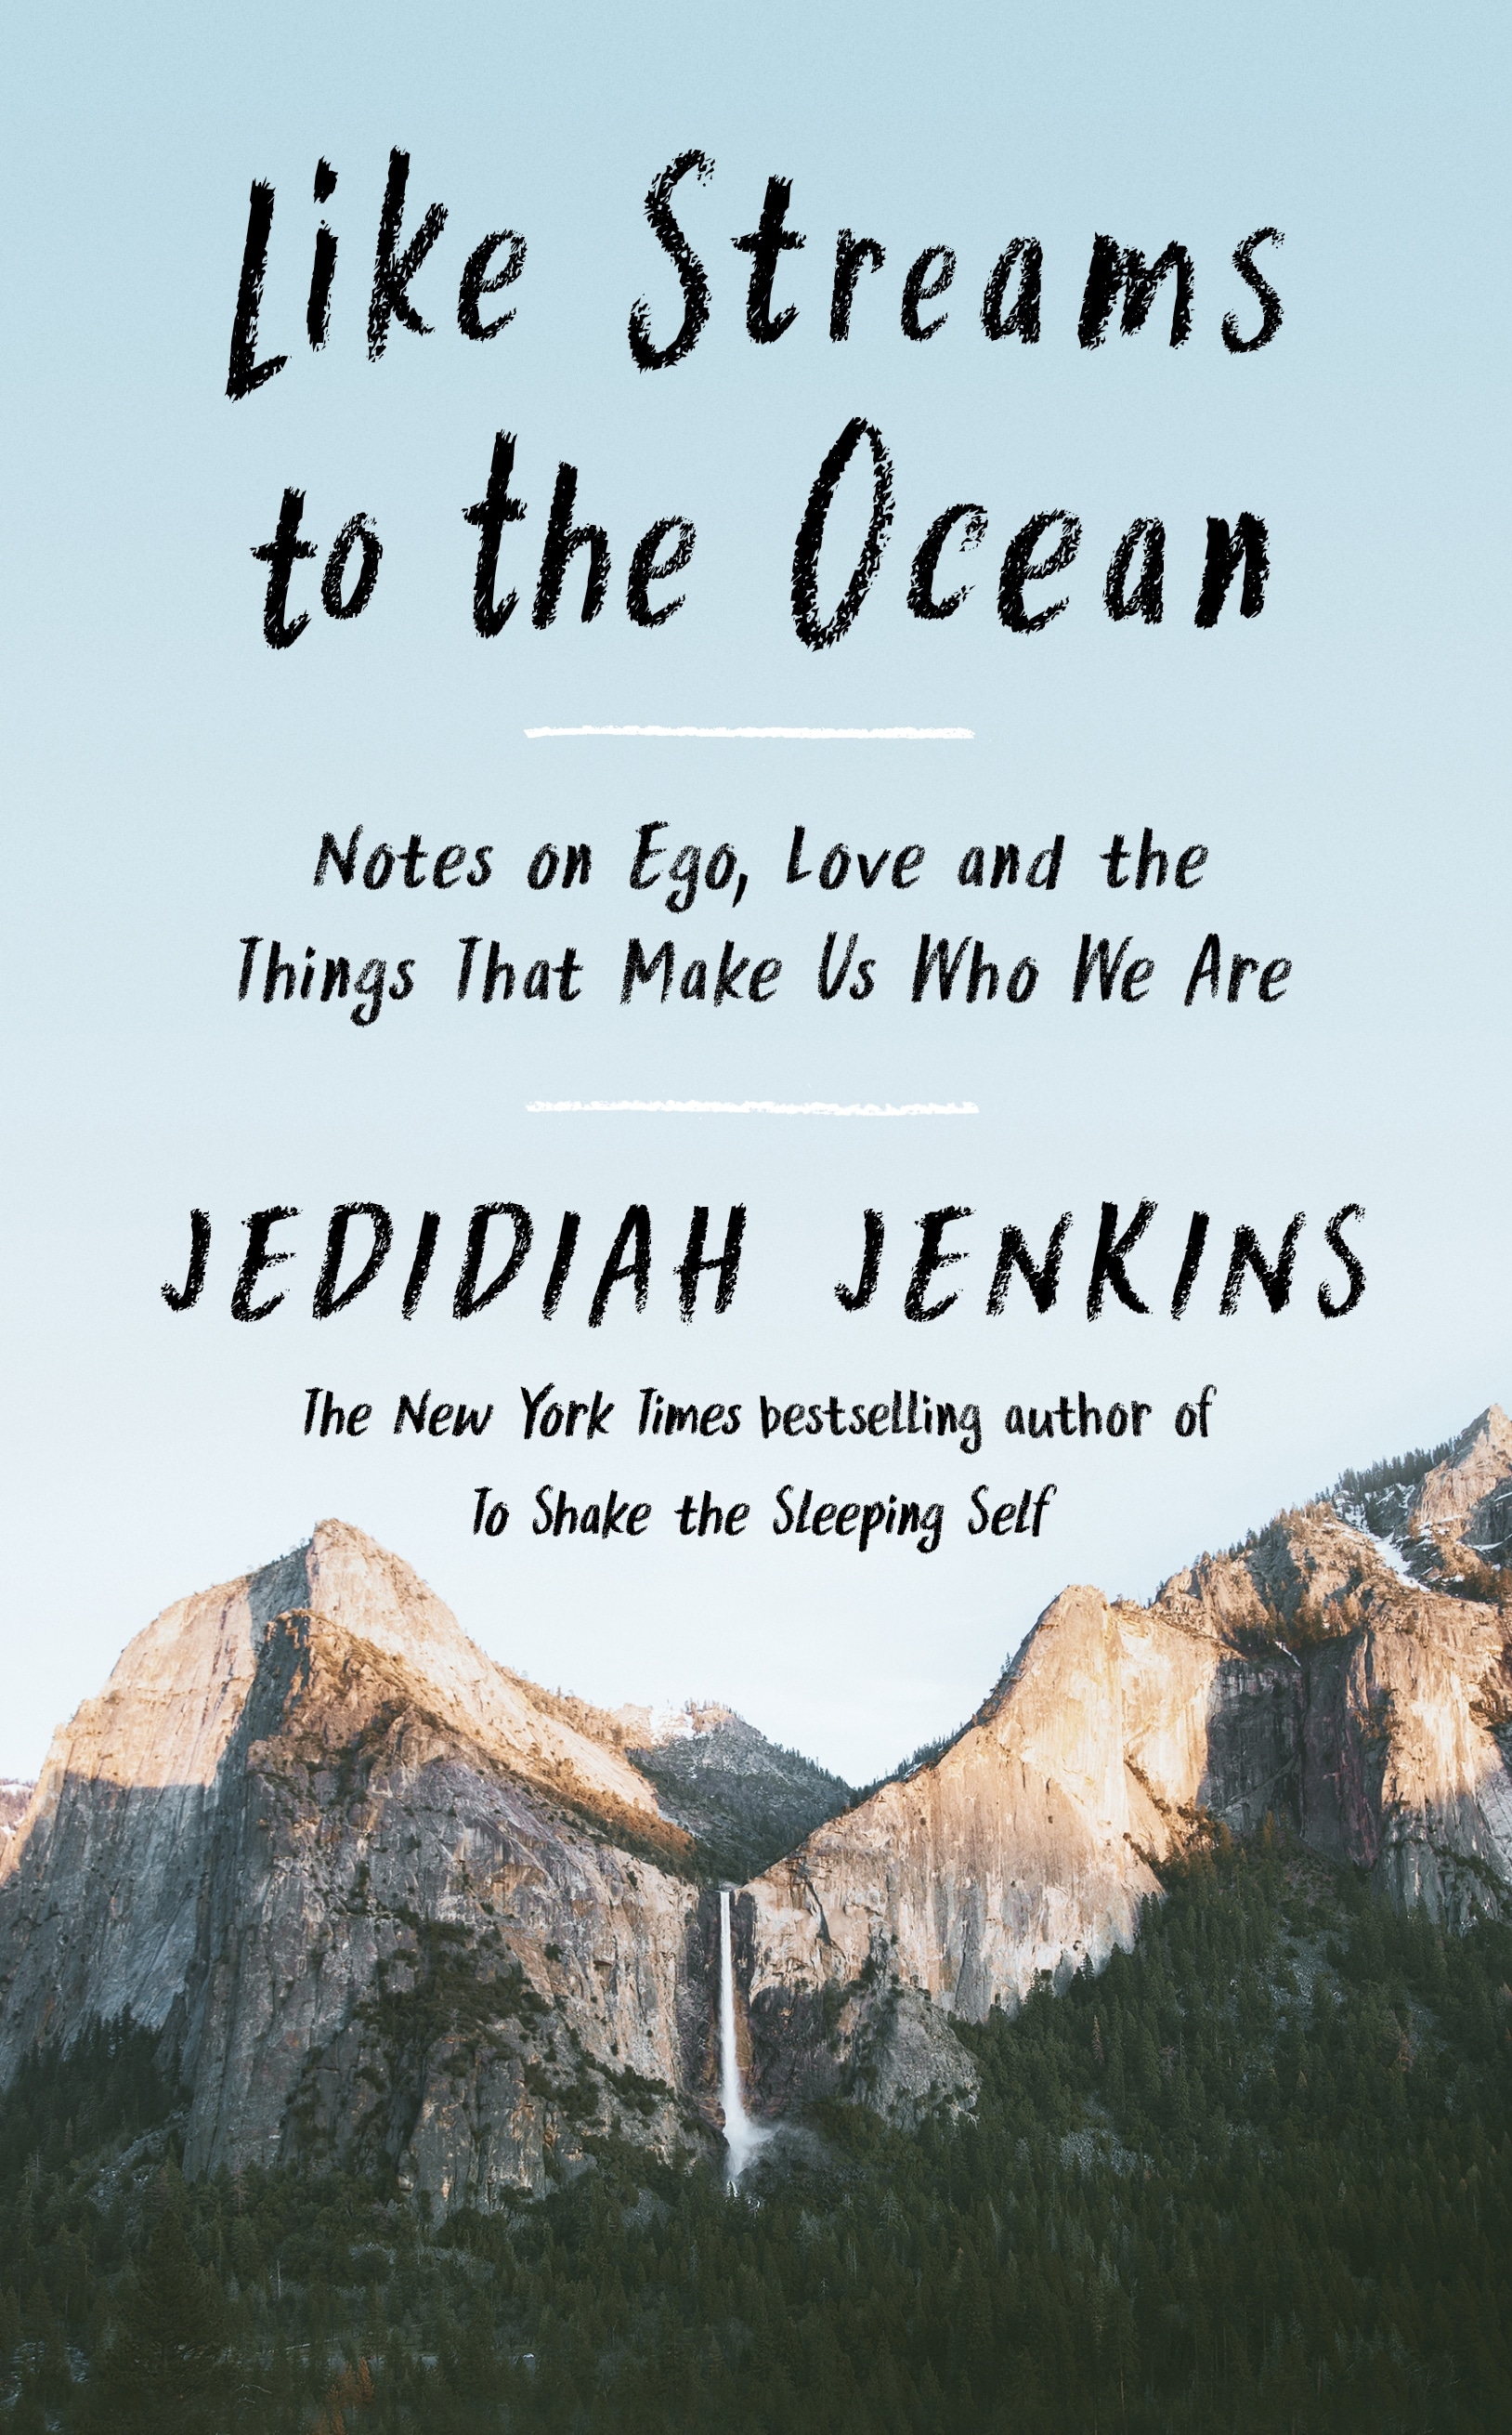 Book “Like Streams to the Ocean” by Jedidiah Jenkins — February 11, 2021